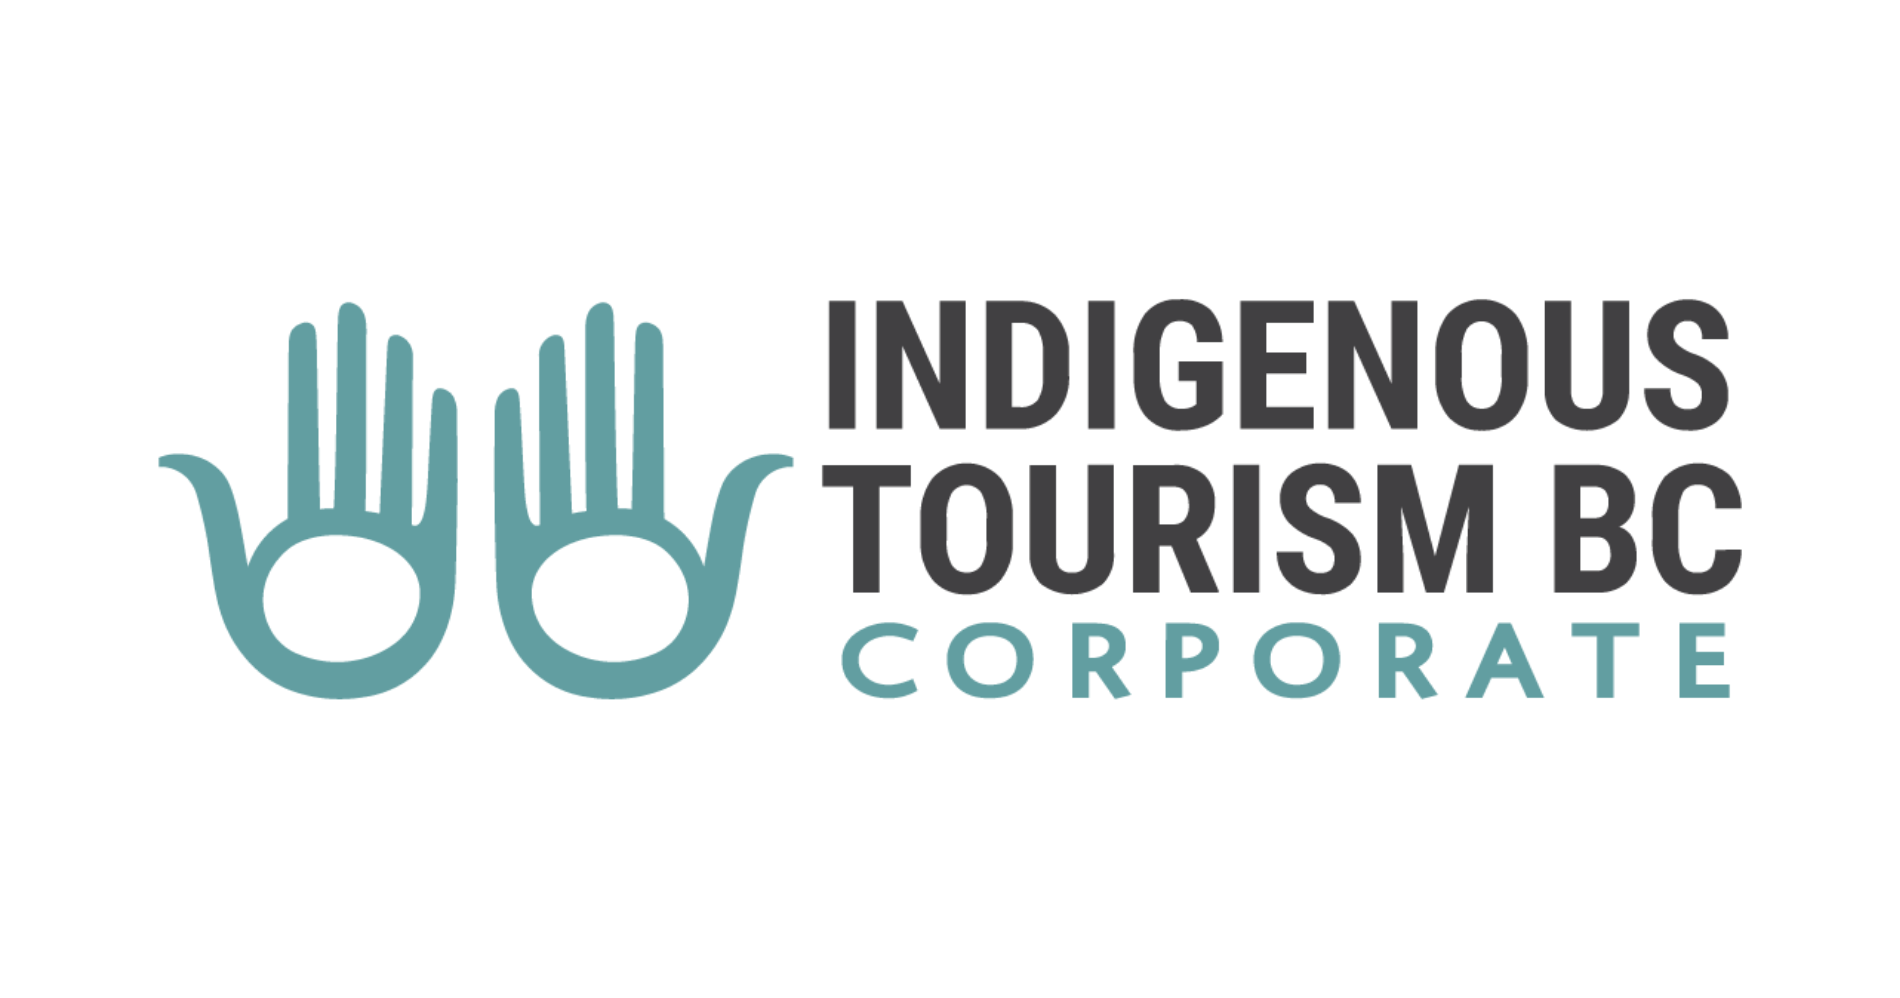 indigenous tourism bc corporate